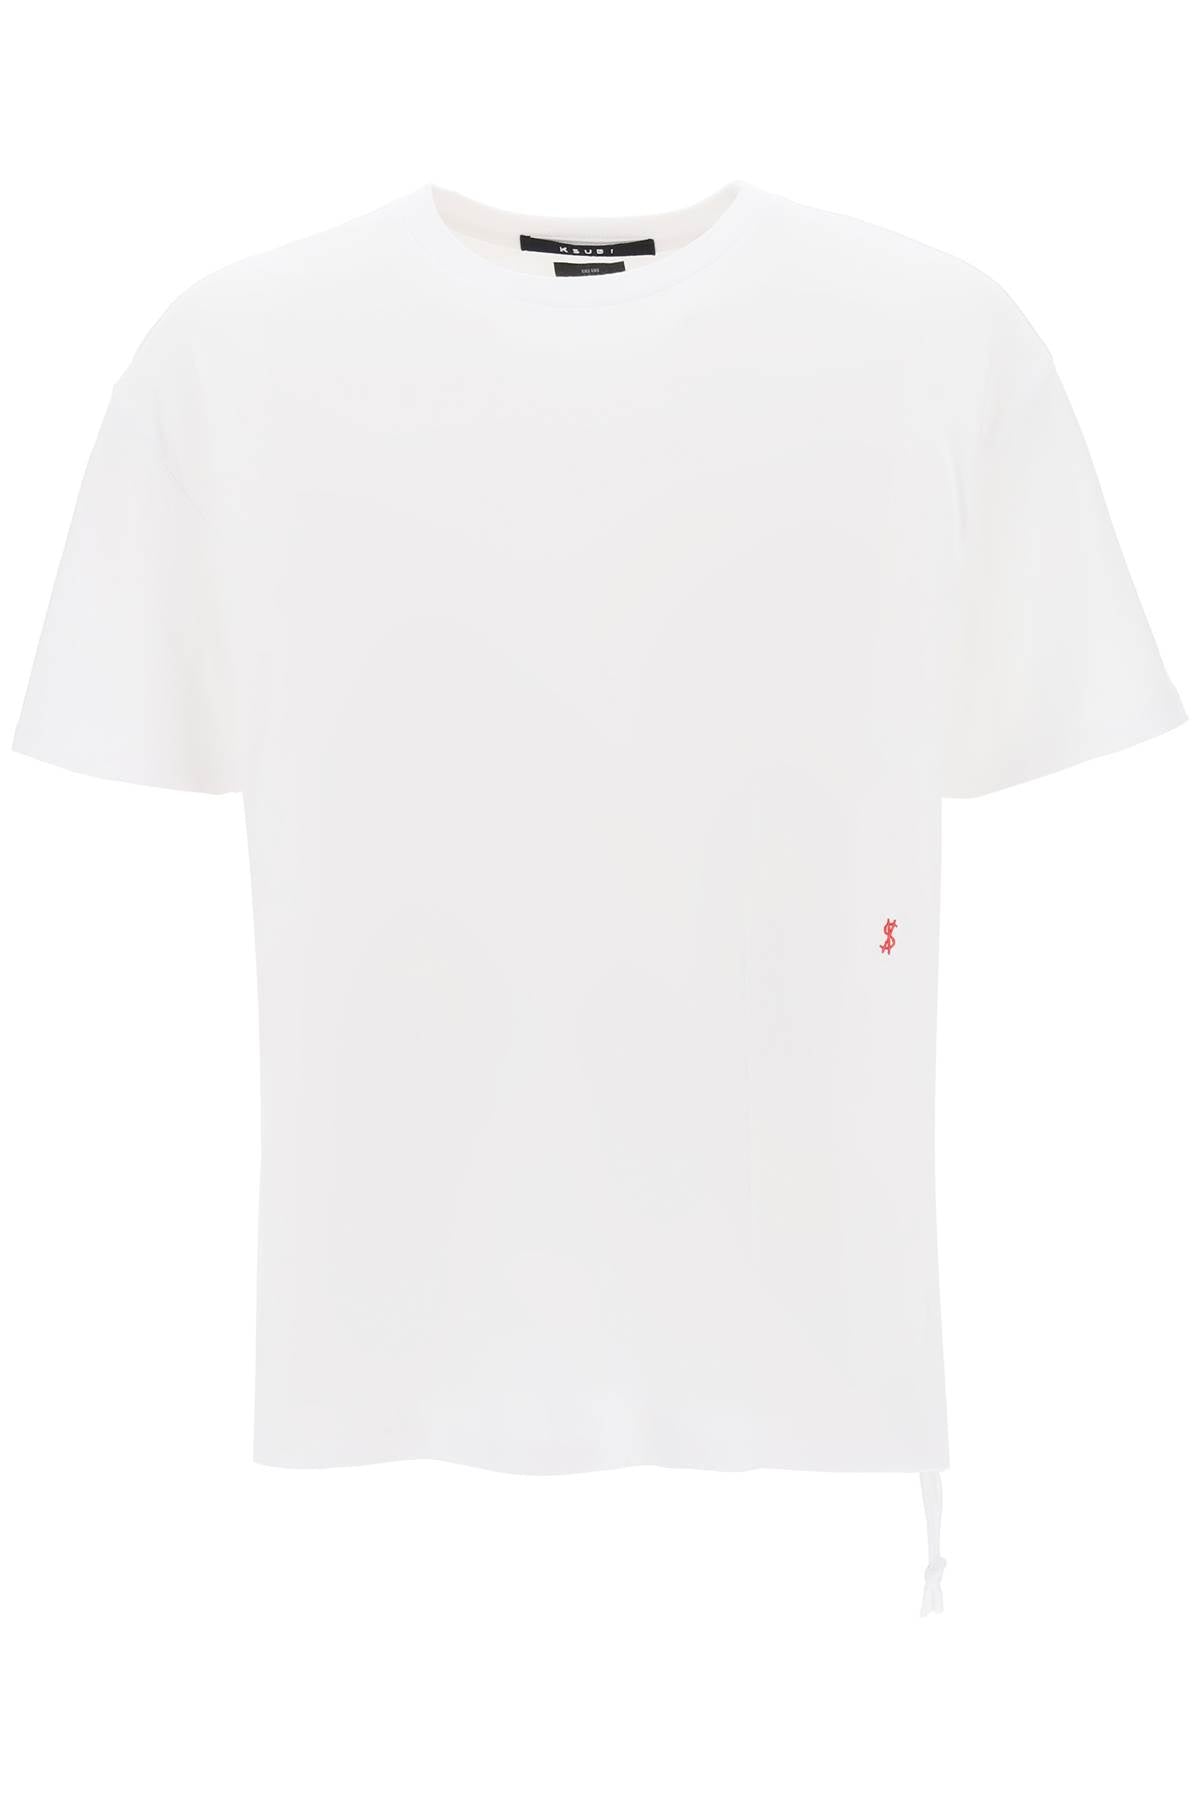 '4X4 Biggie' T-Shirt